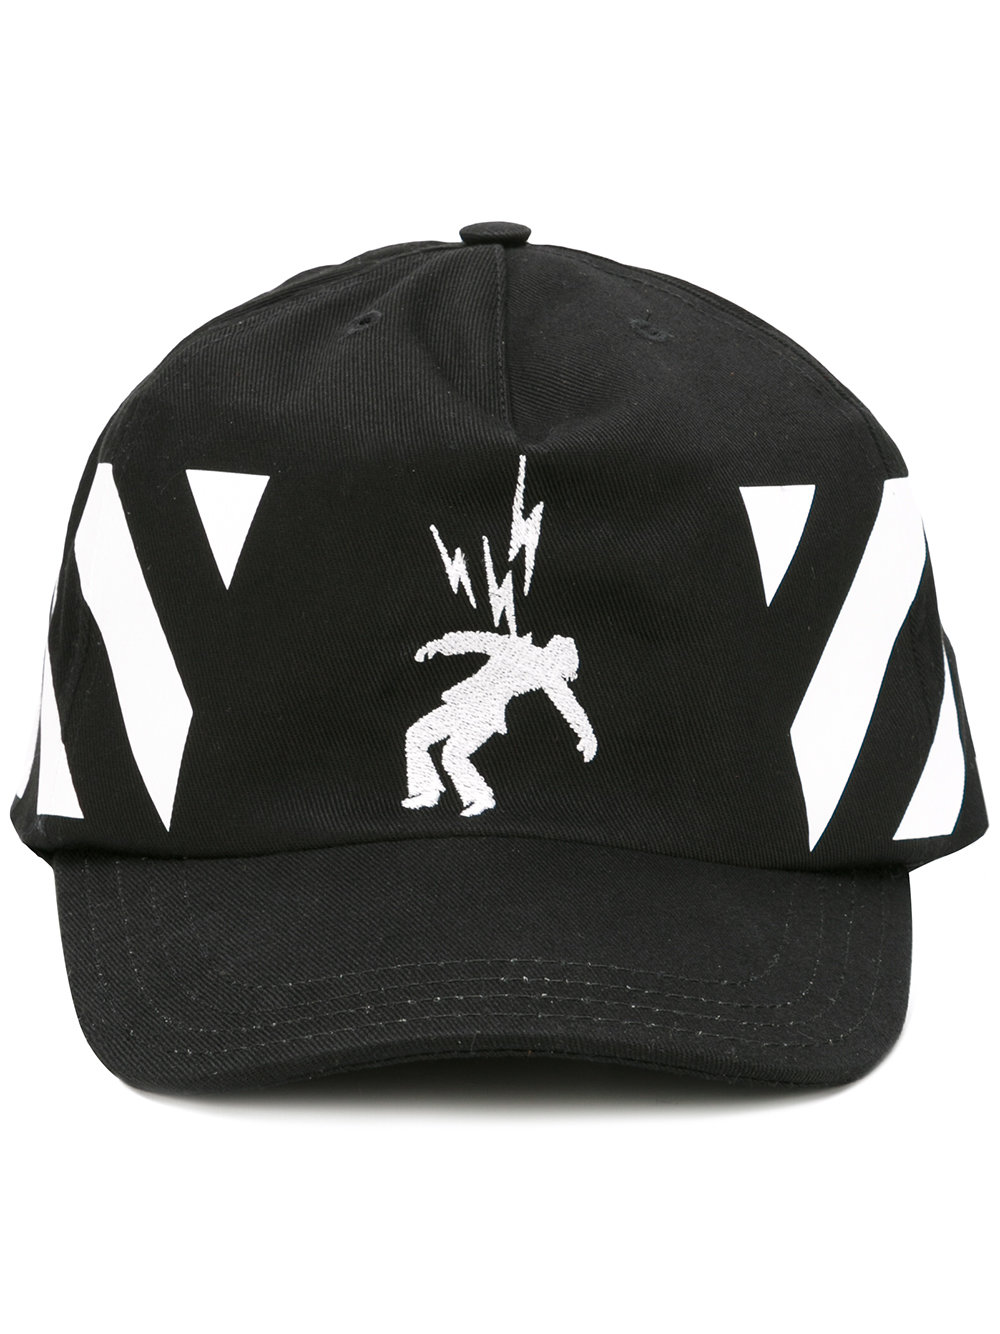 Off-White Diagonals Electricity cap 1001 BLACK Men Accessories Hats